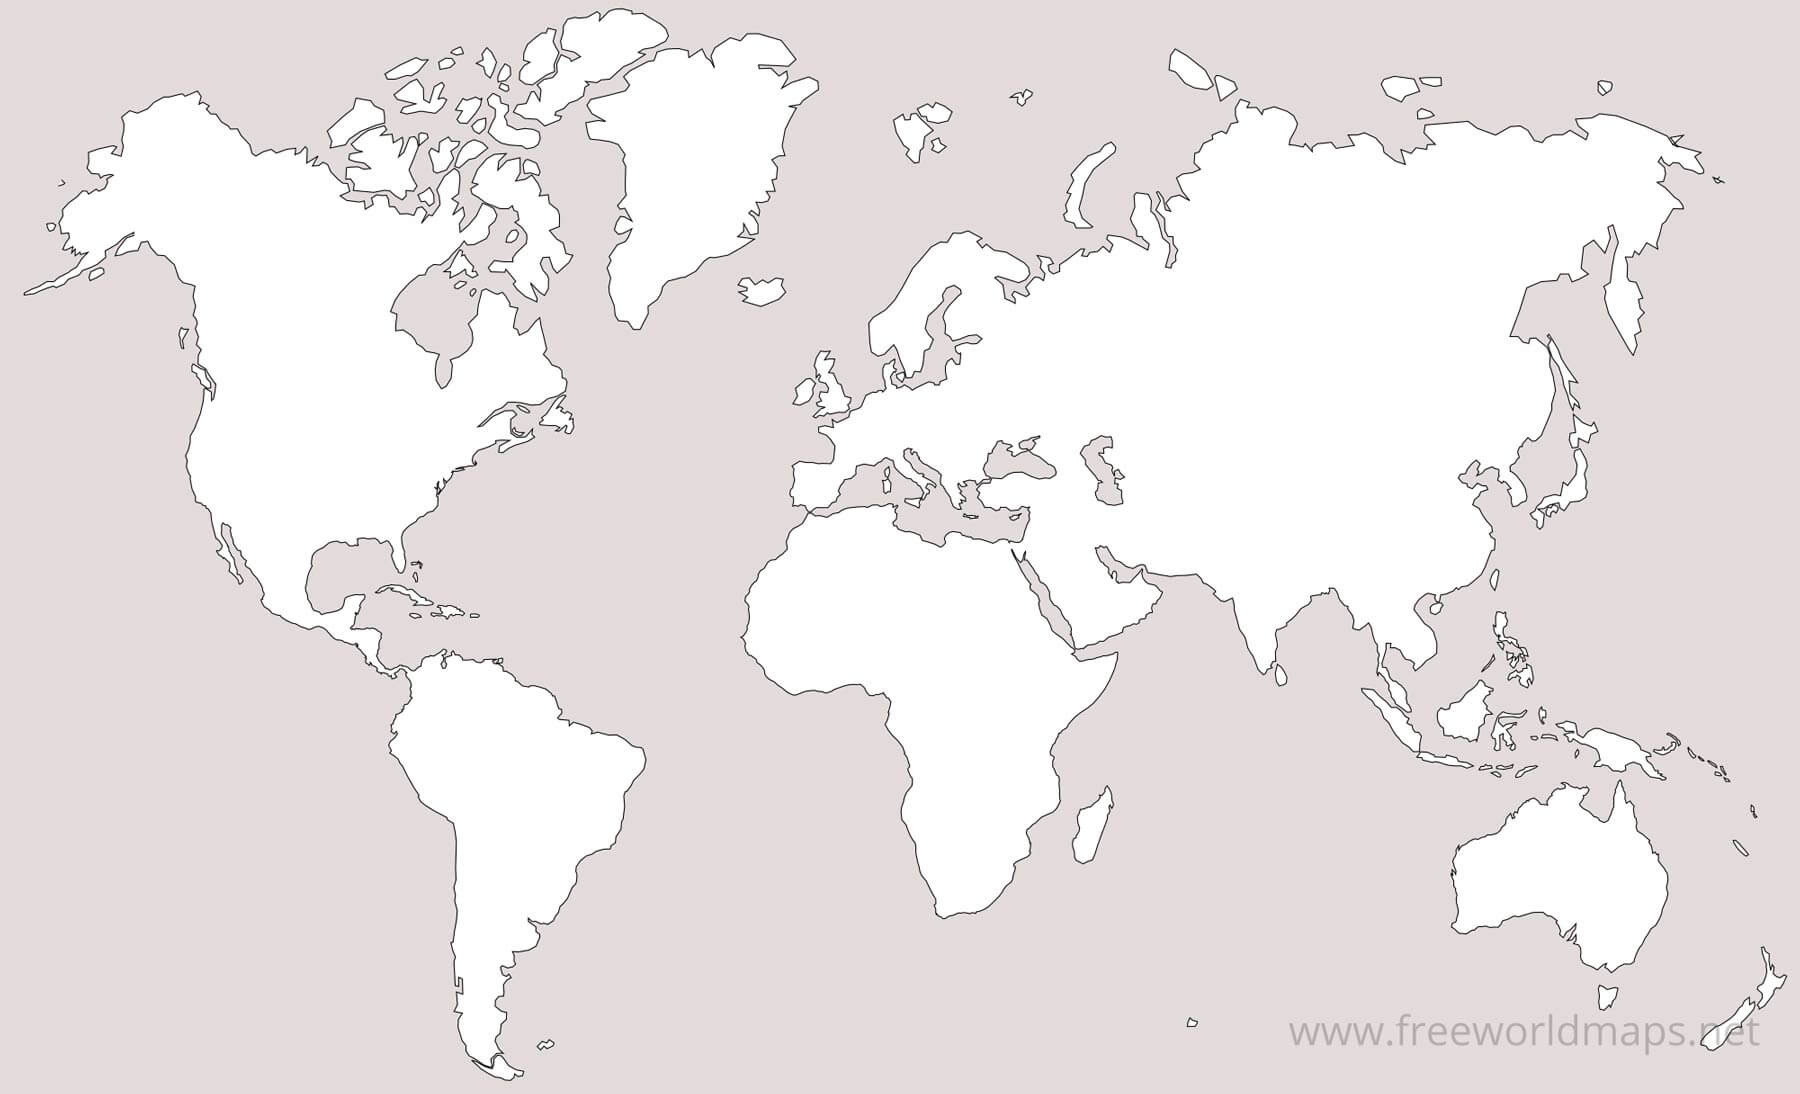 Download Free World Maps